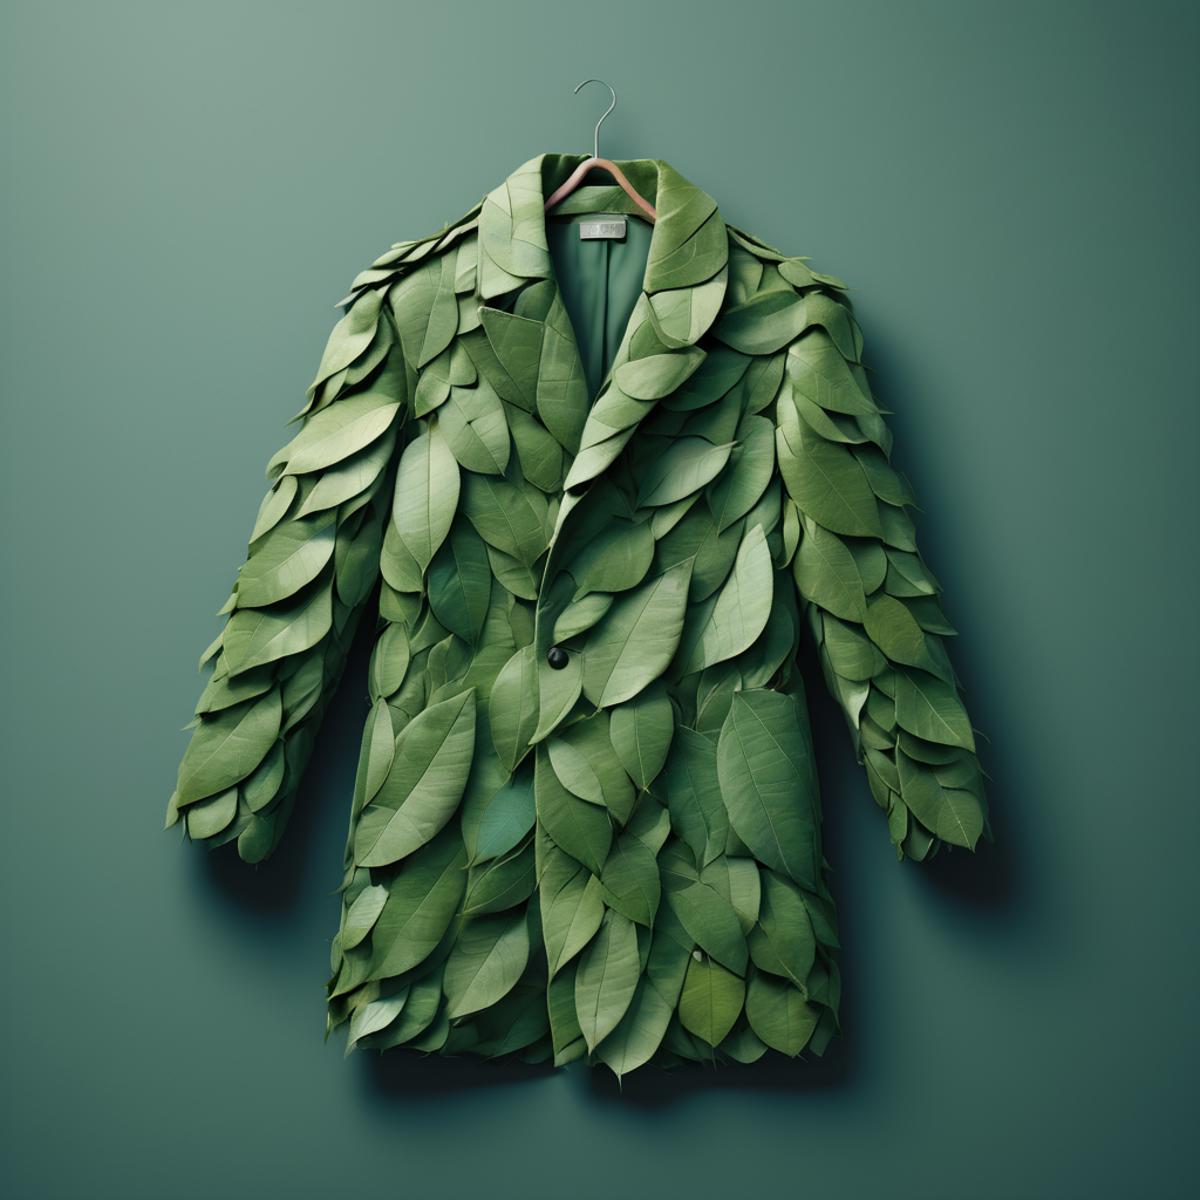 Leaf Style XL image by nocor1i8